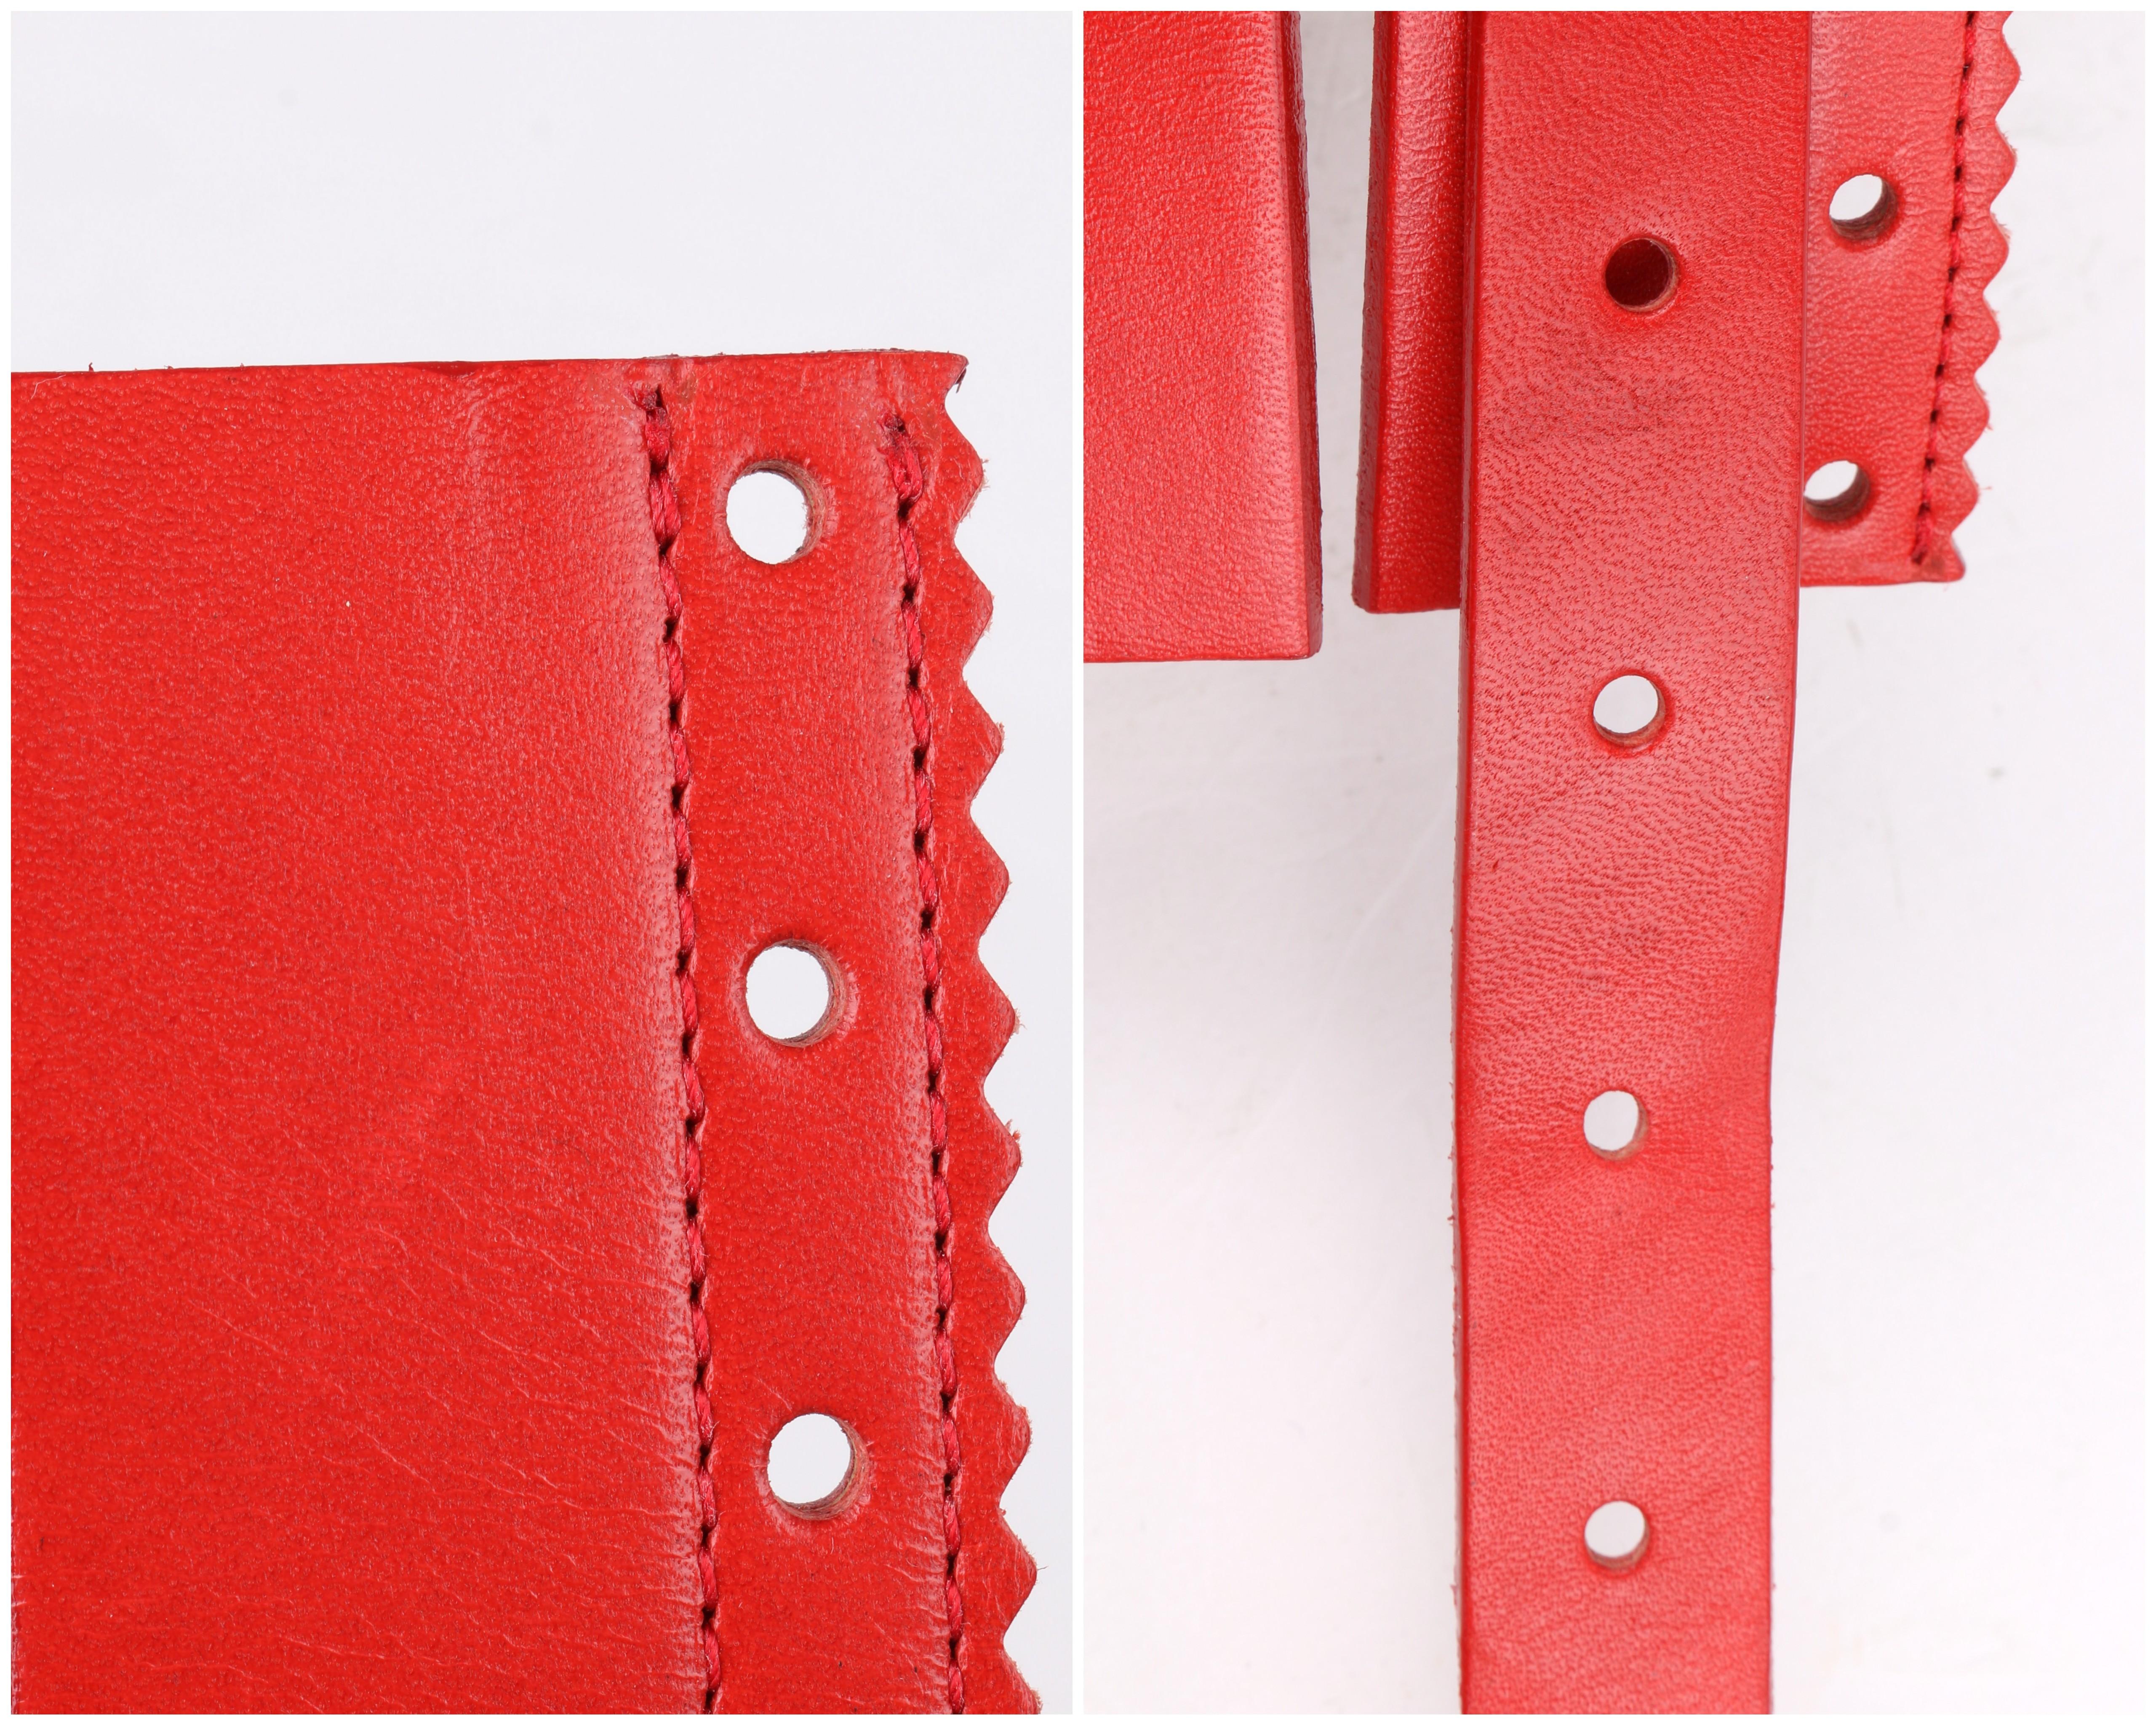 OSCAR DE LA RENTA S/S 2011 Red Perforated Leather Dual Buckle Waist Belt 1